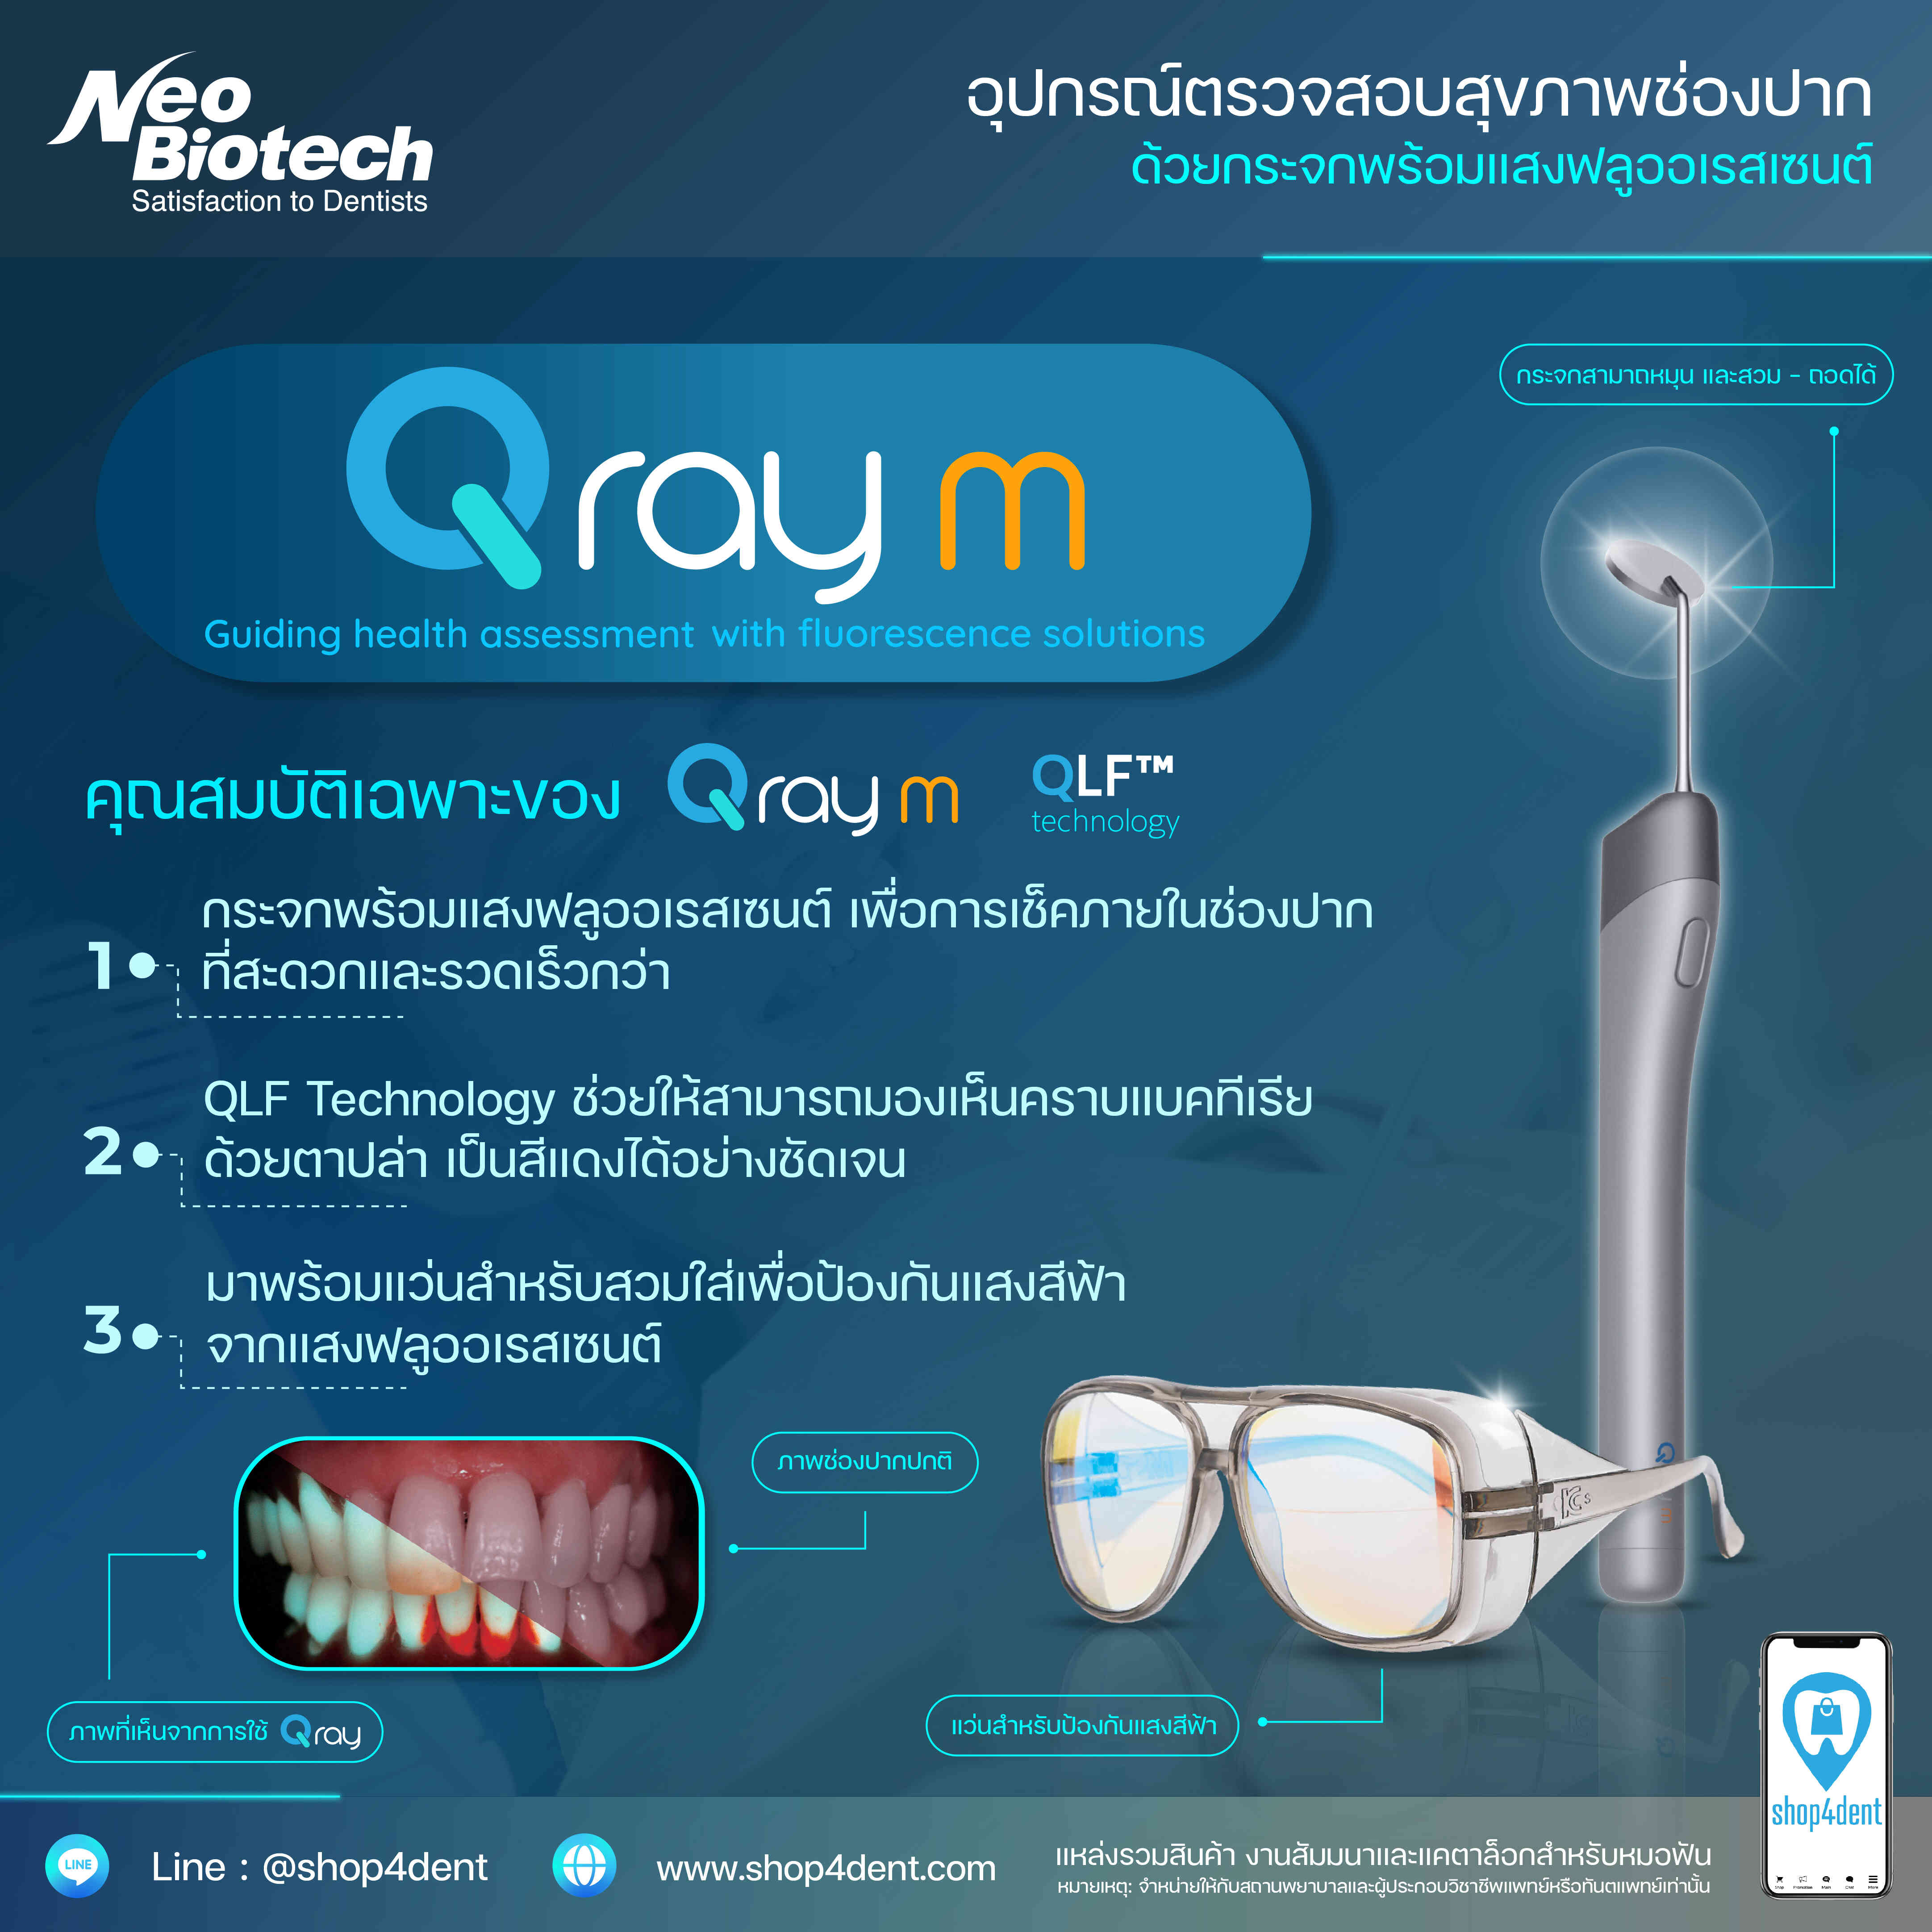 Neobiotech Qray M อุปกรณ์ตรวจสุขภาพช่องปาก ด้วยกระจกพร้อมแสงฟลูออเรสเซนต์